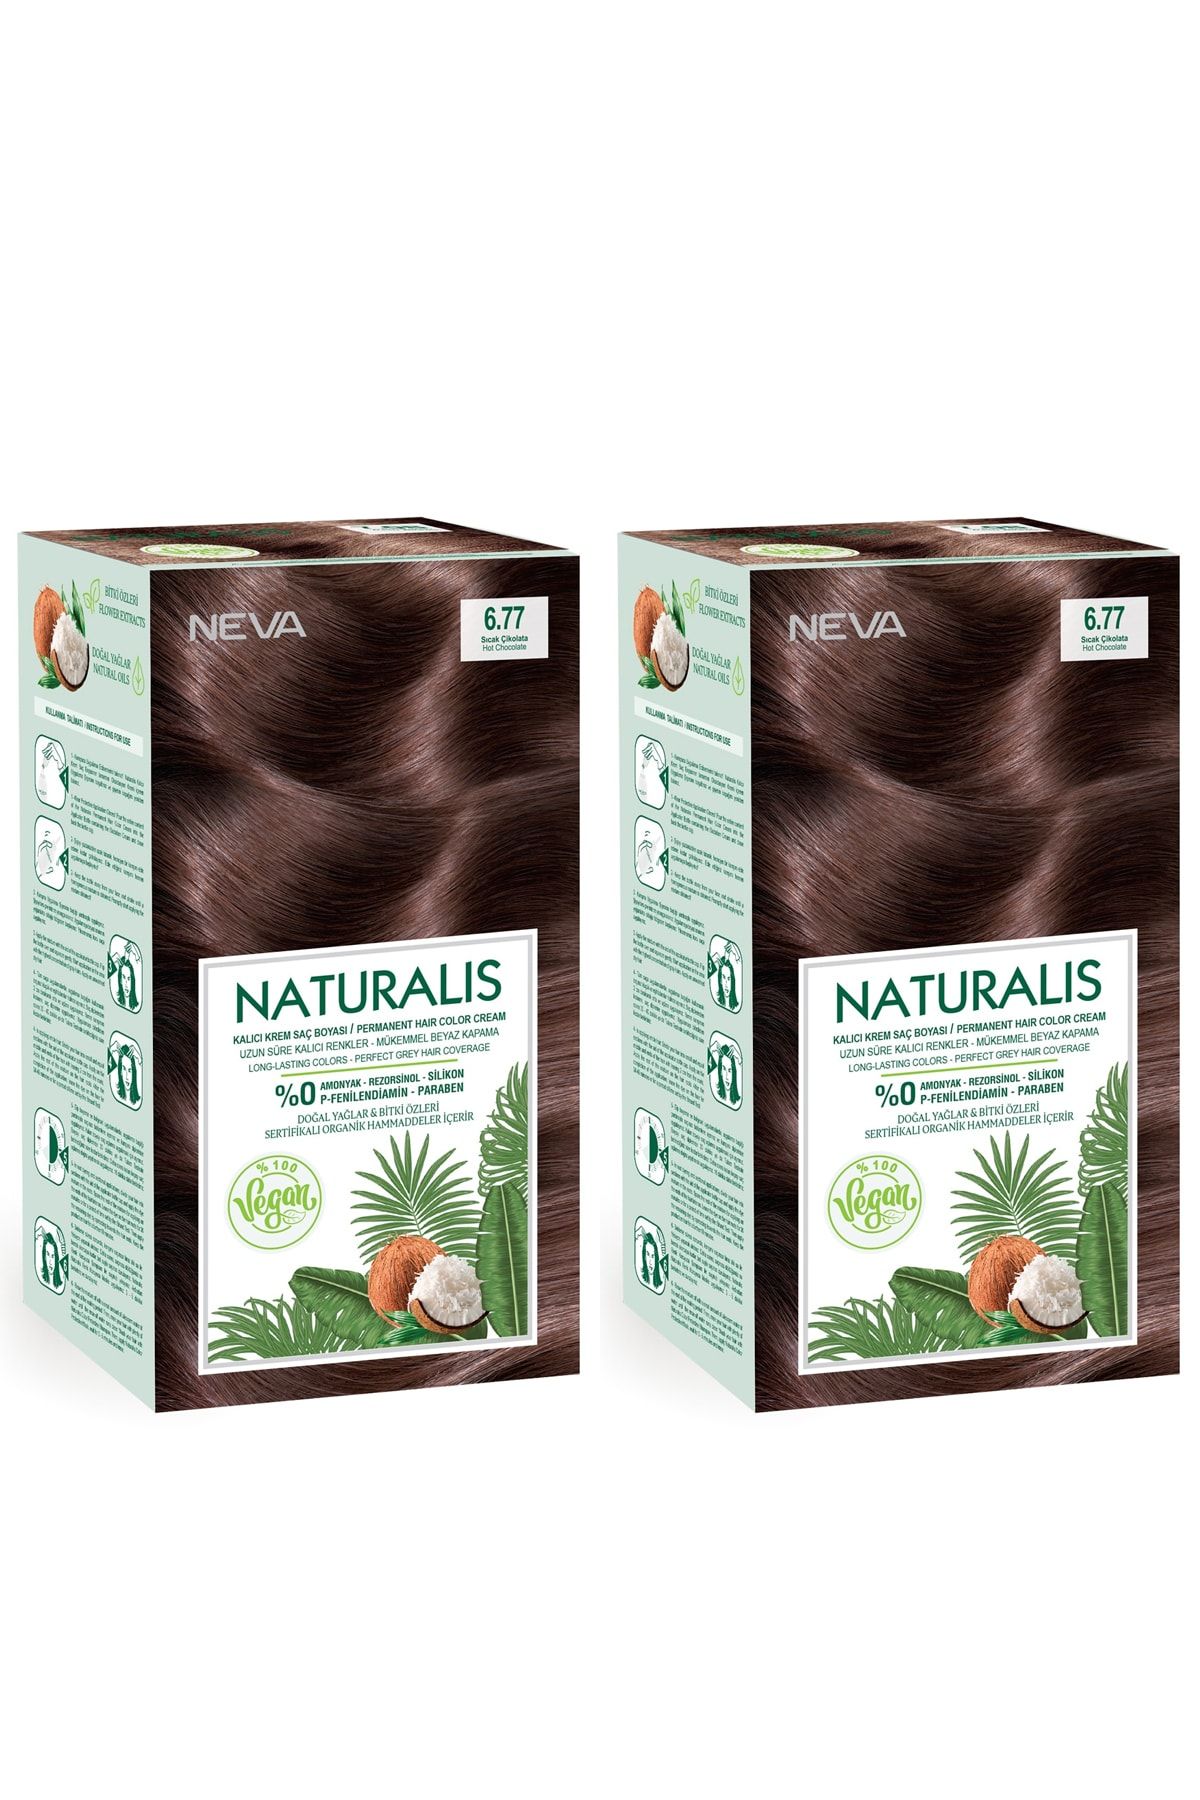 NEVA KOZMETİK Naturalis Saç Boyası 6.77 Sıcak Çikolata %100 Vegan 2'li Set